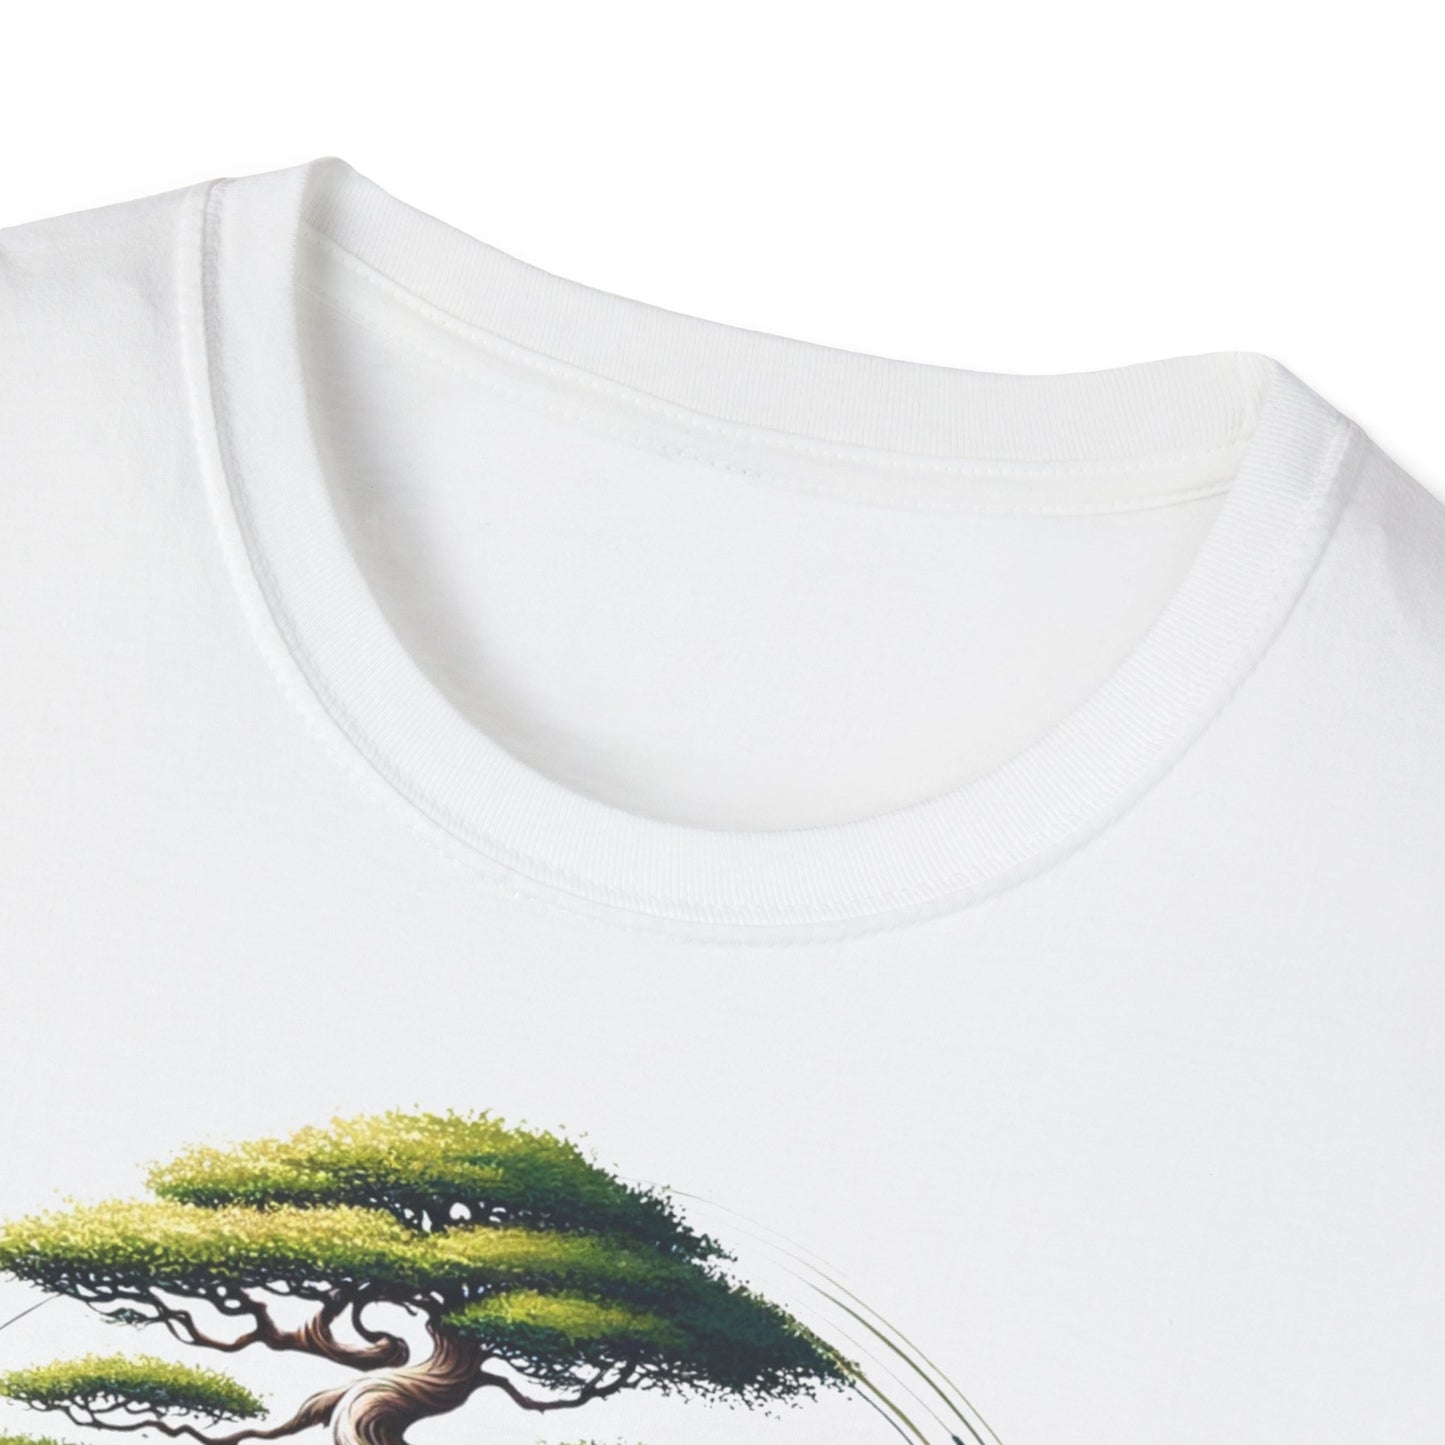 bonsai camiseta bonsai camisetas exclusivas camisetas japonesas españolas camisetas unicas